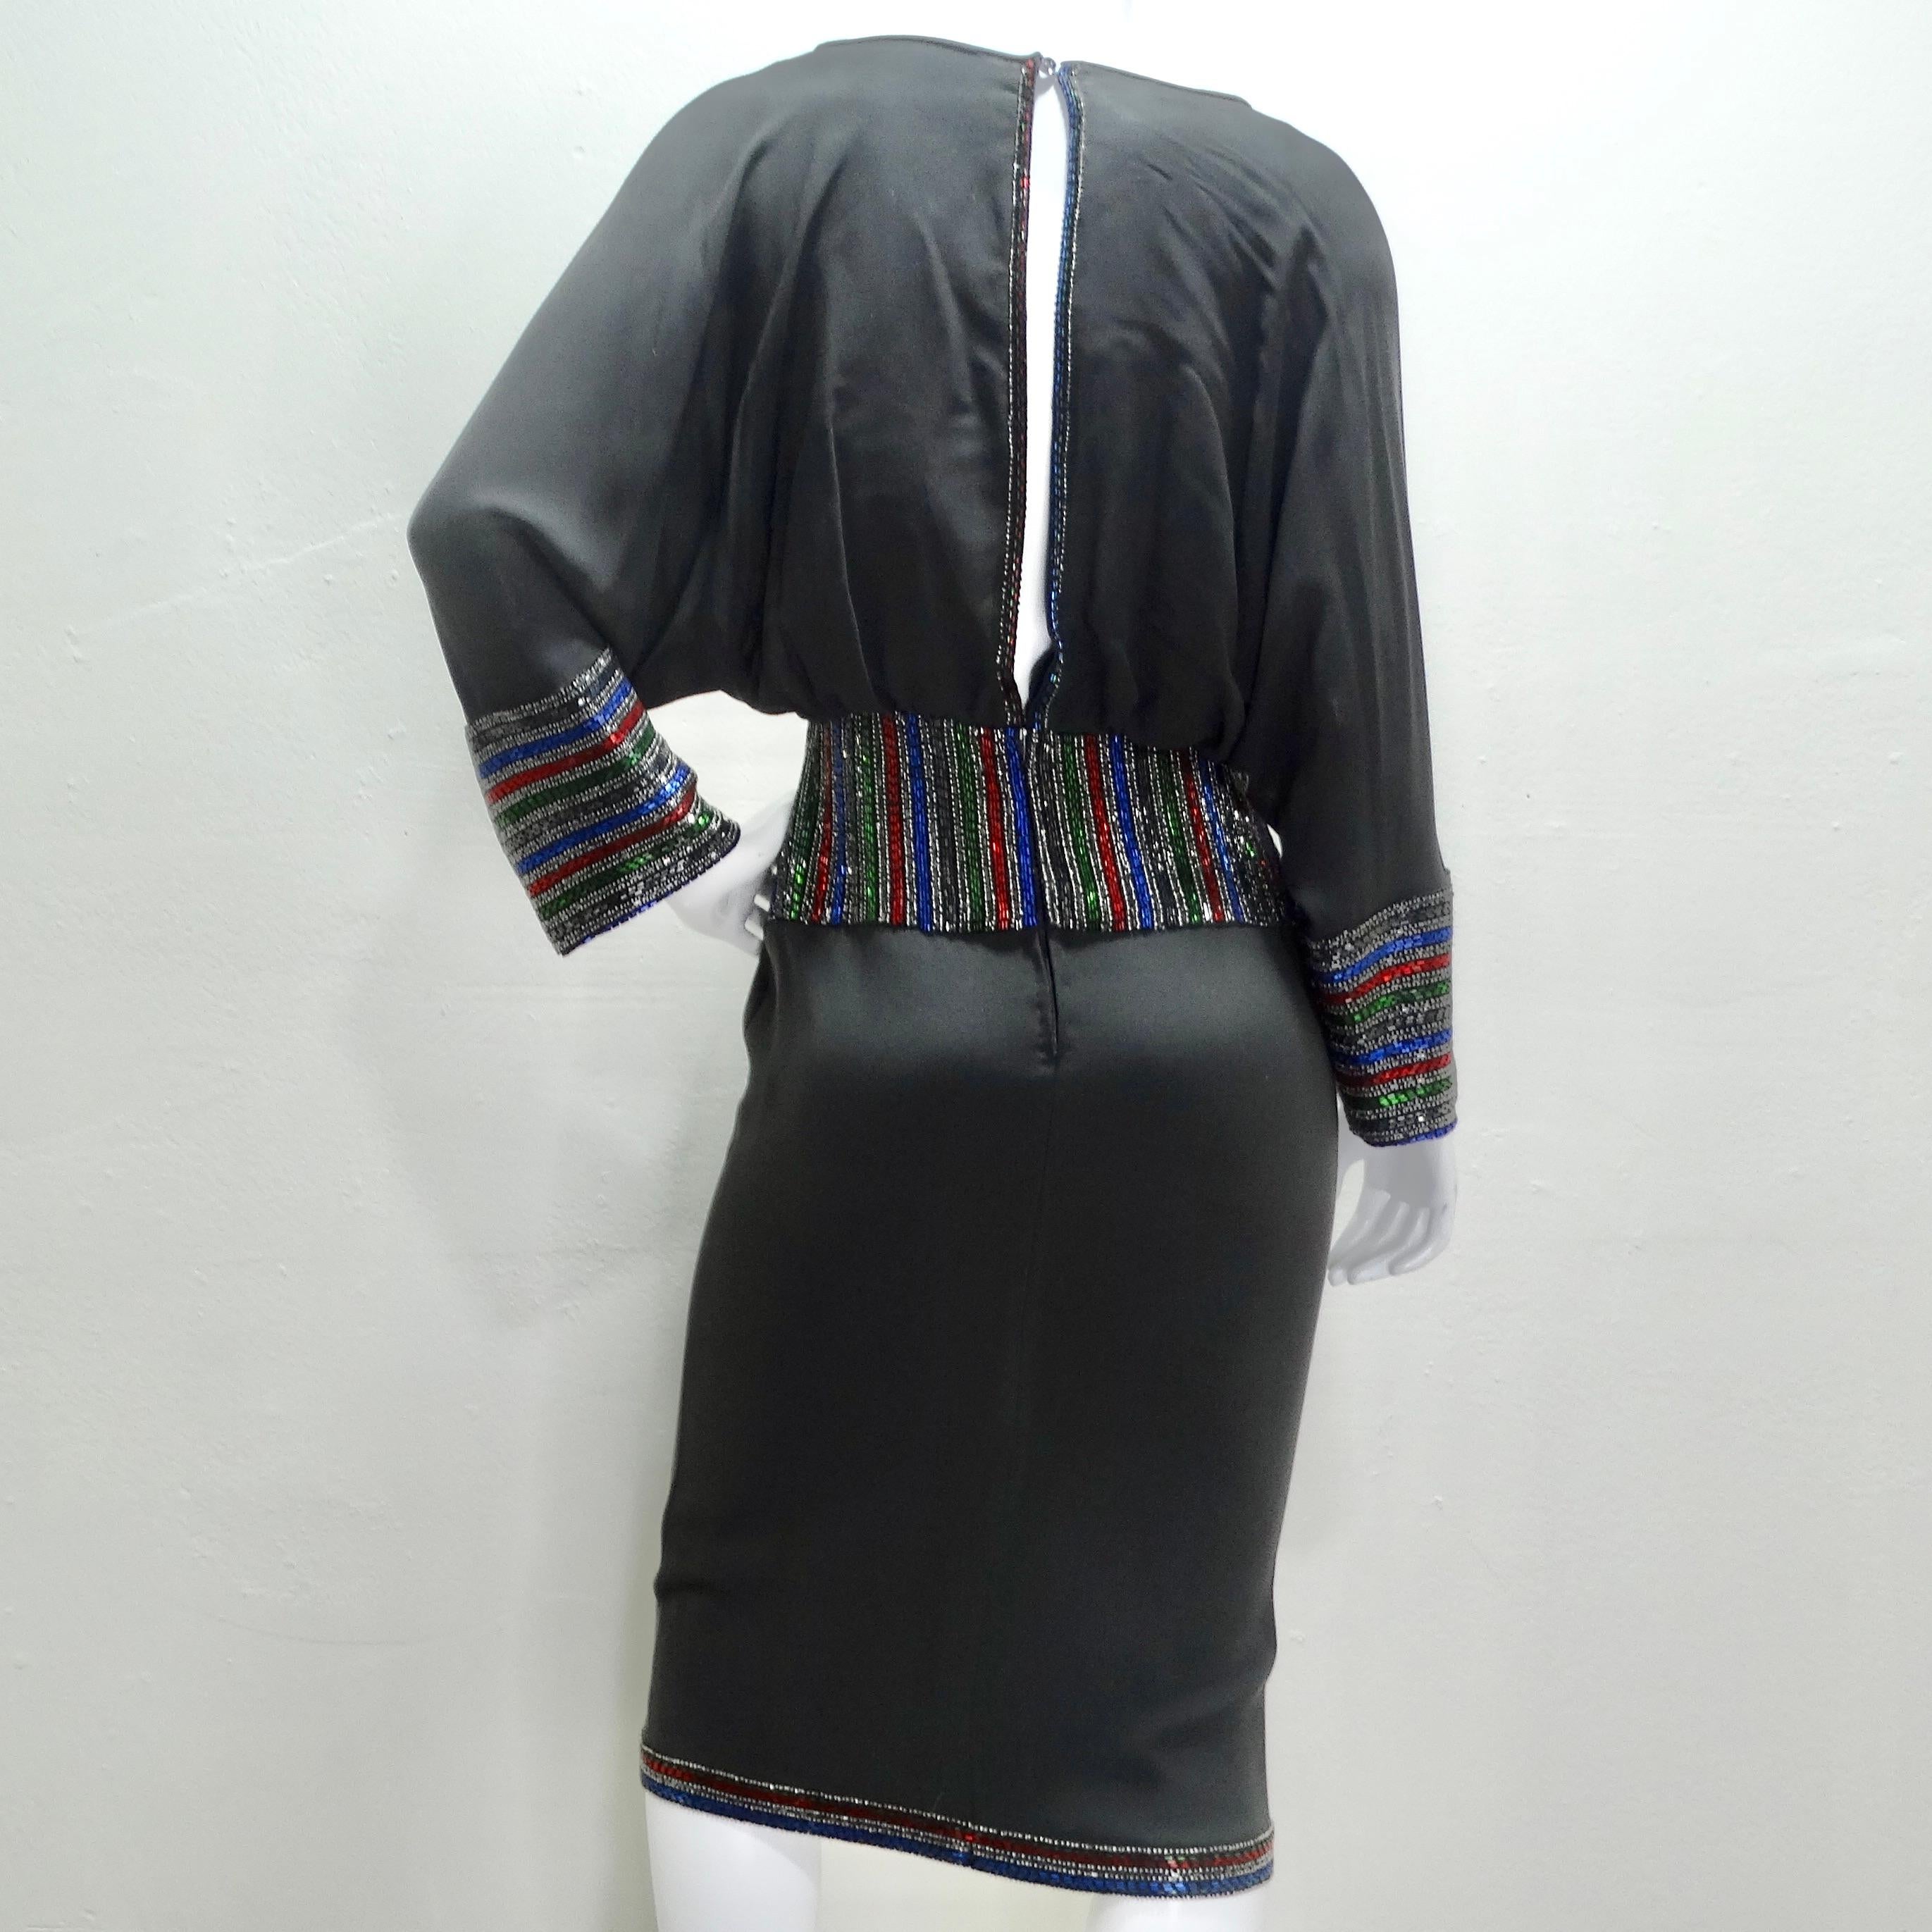 Chloe By Karl Lagerfeld for Chloe, robe midi avec ornements des années 1980 en vente 1